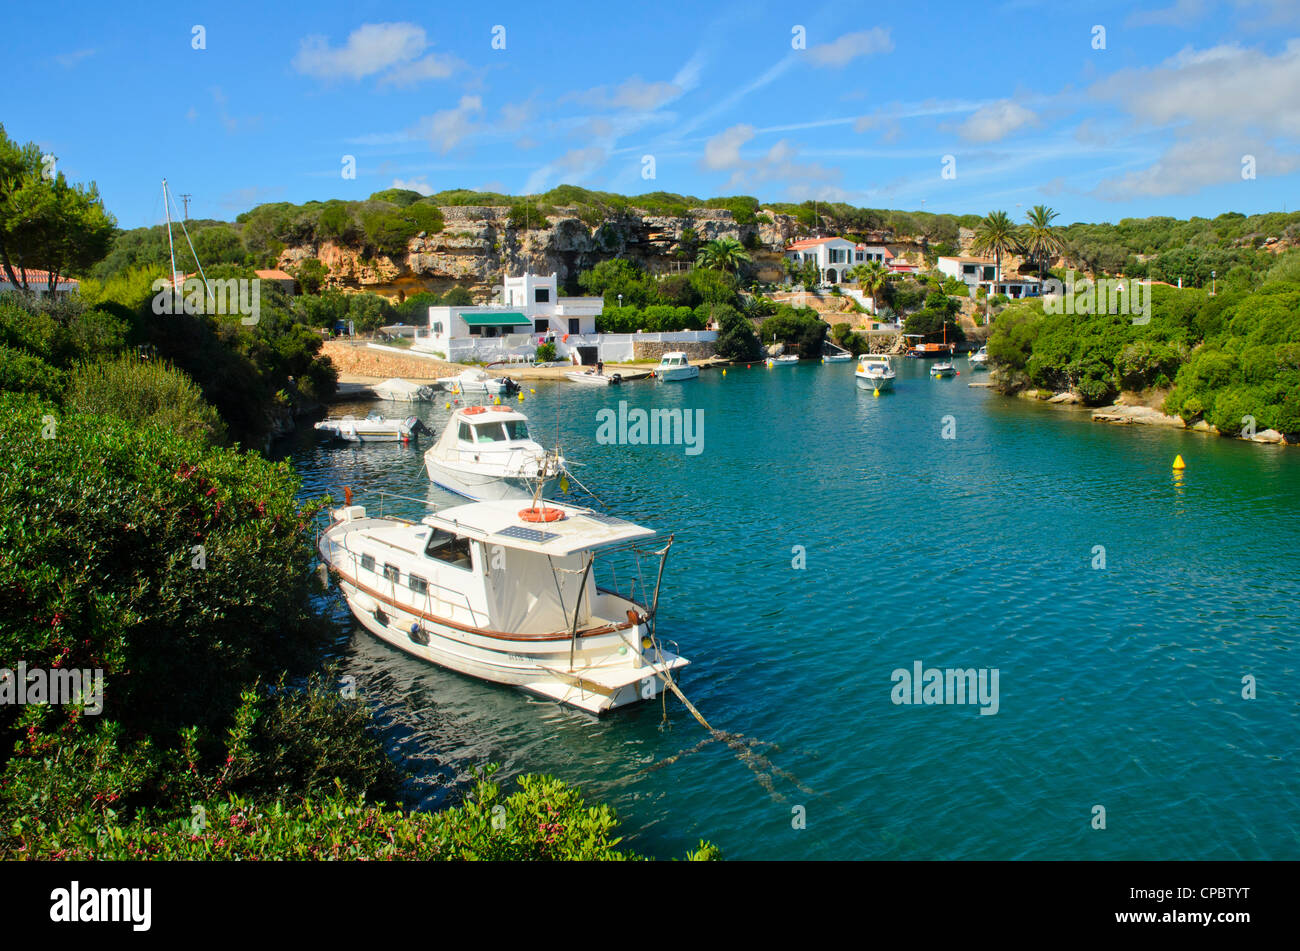 The bay of Cala de Sant Esteve on Menorca in the Balearic islands, Spain Stock Photo